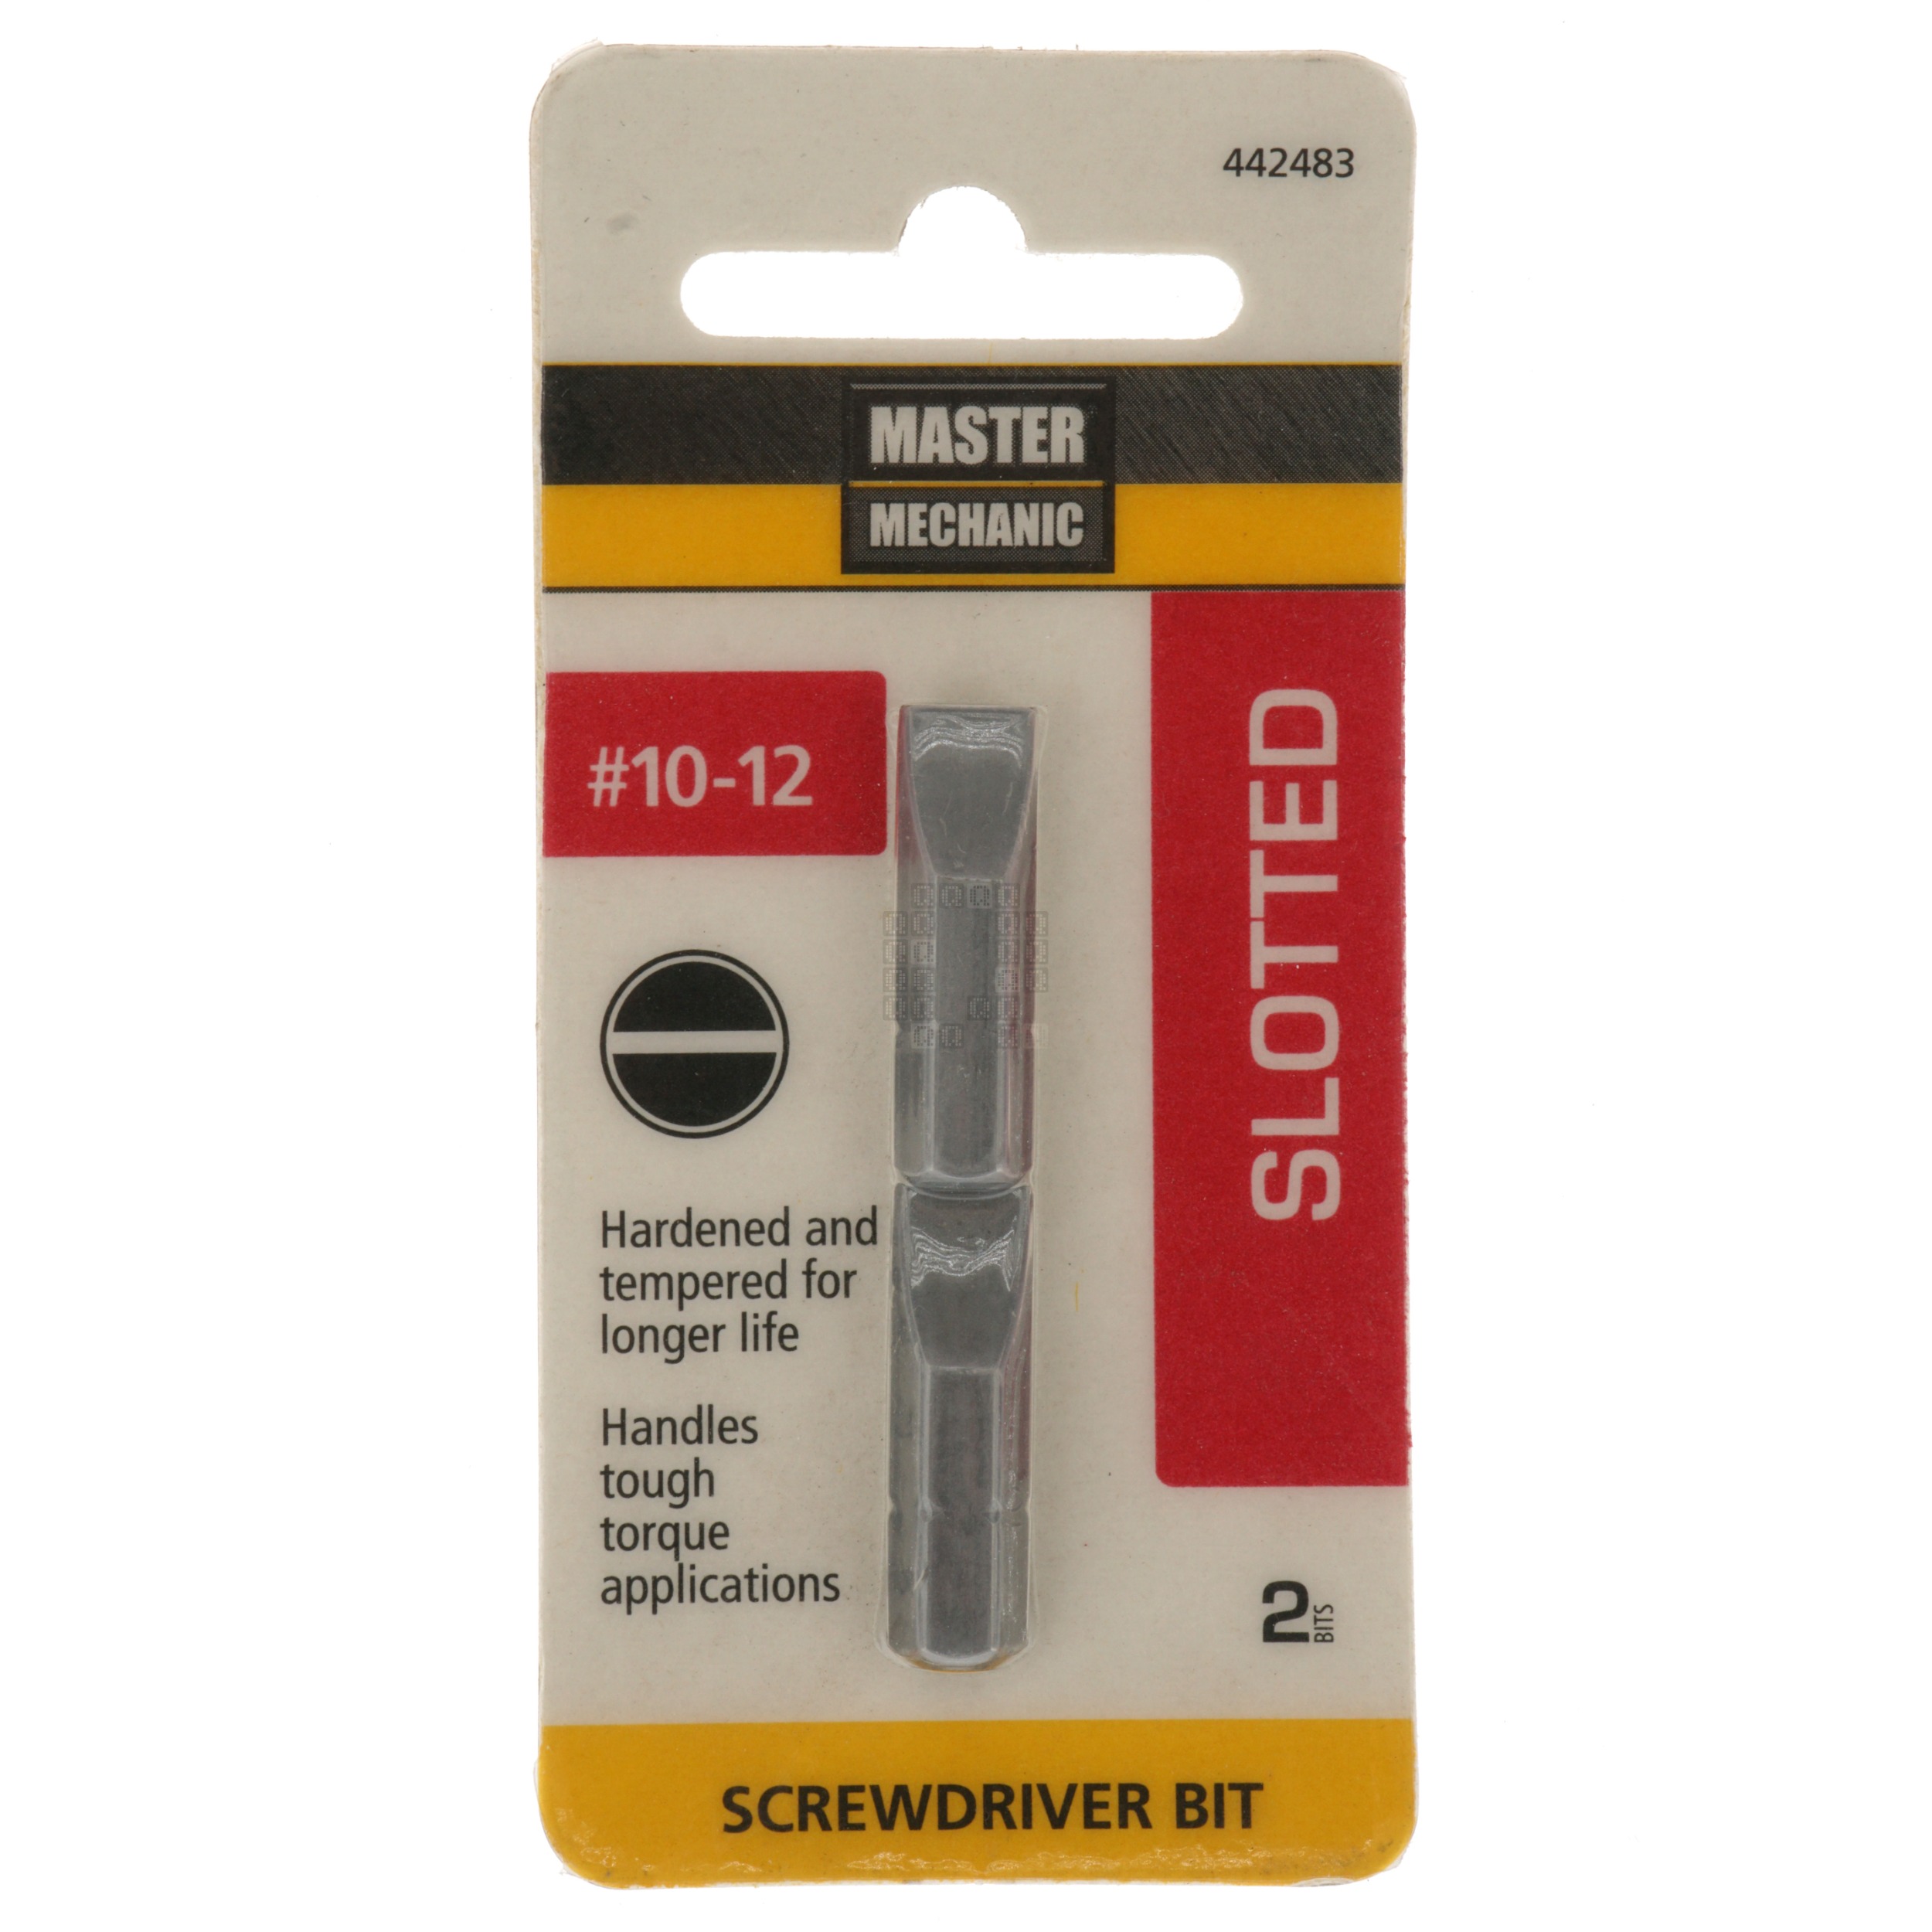 Master Mechanic 442483 #10-12 Slotted Screwdriver Bit, 1" Length, 2-Pack